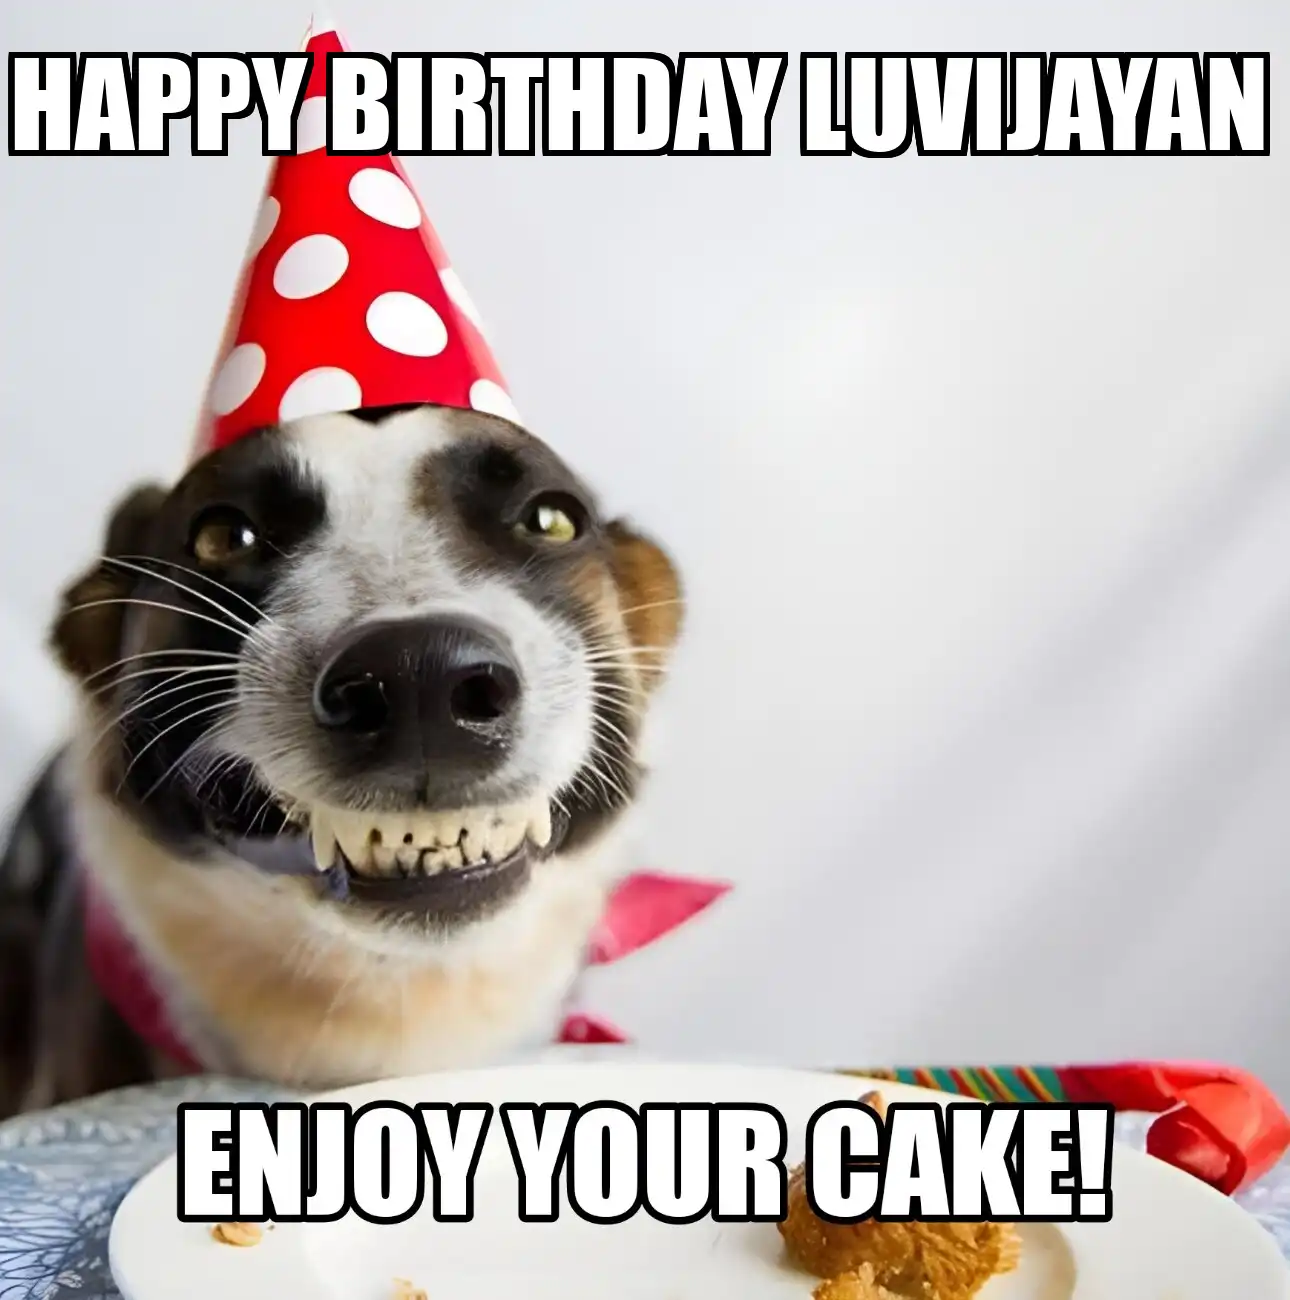 Happy Birthday Luvijayan Enjoy Your Cake Dog Meme